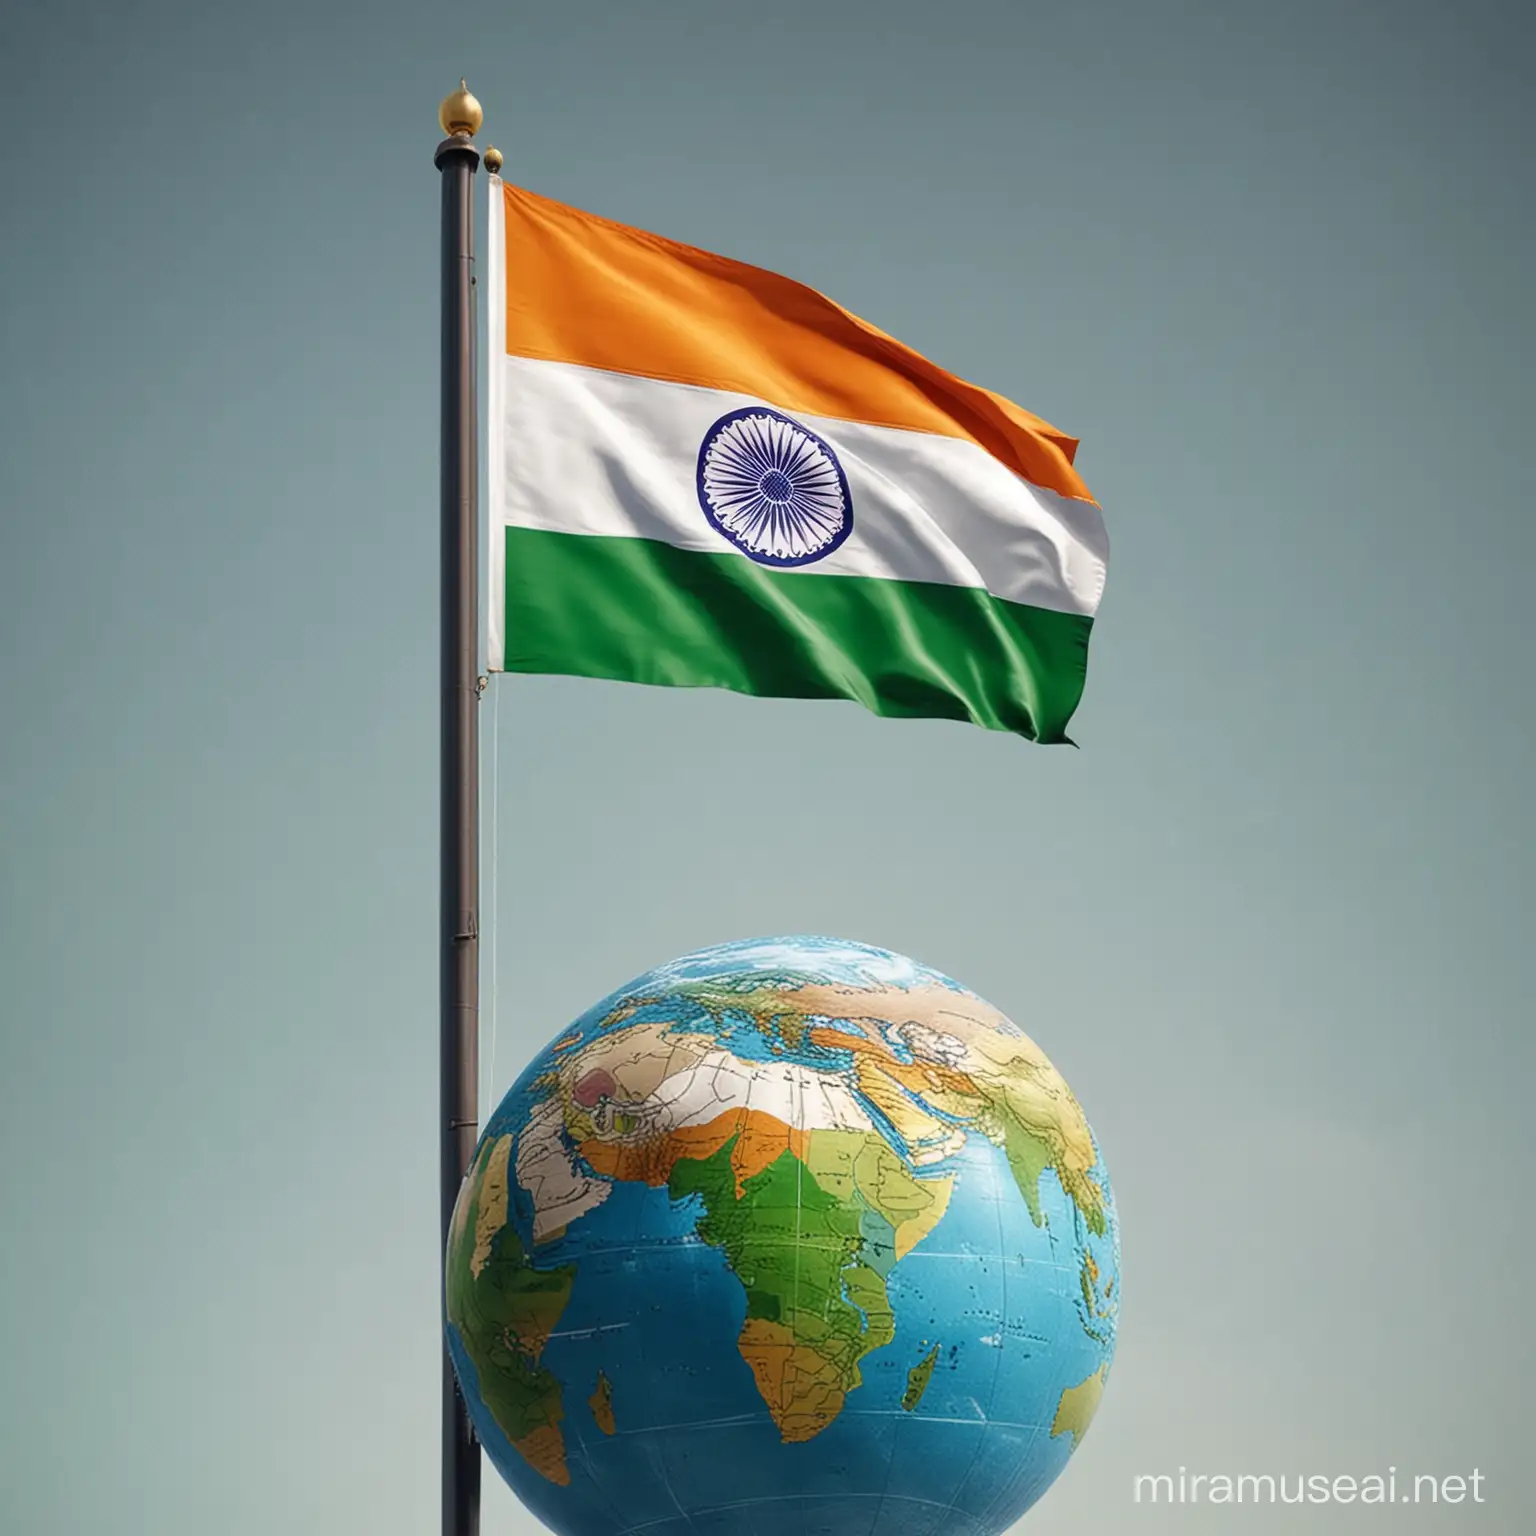 India flag hoisting on top of the globe 
 